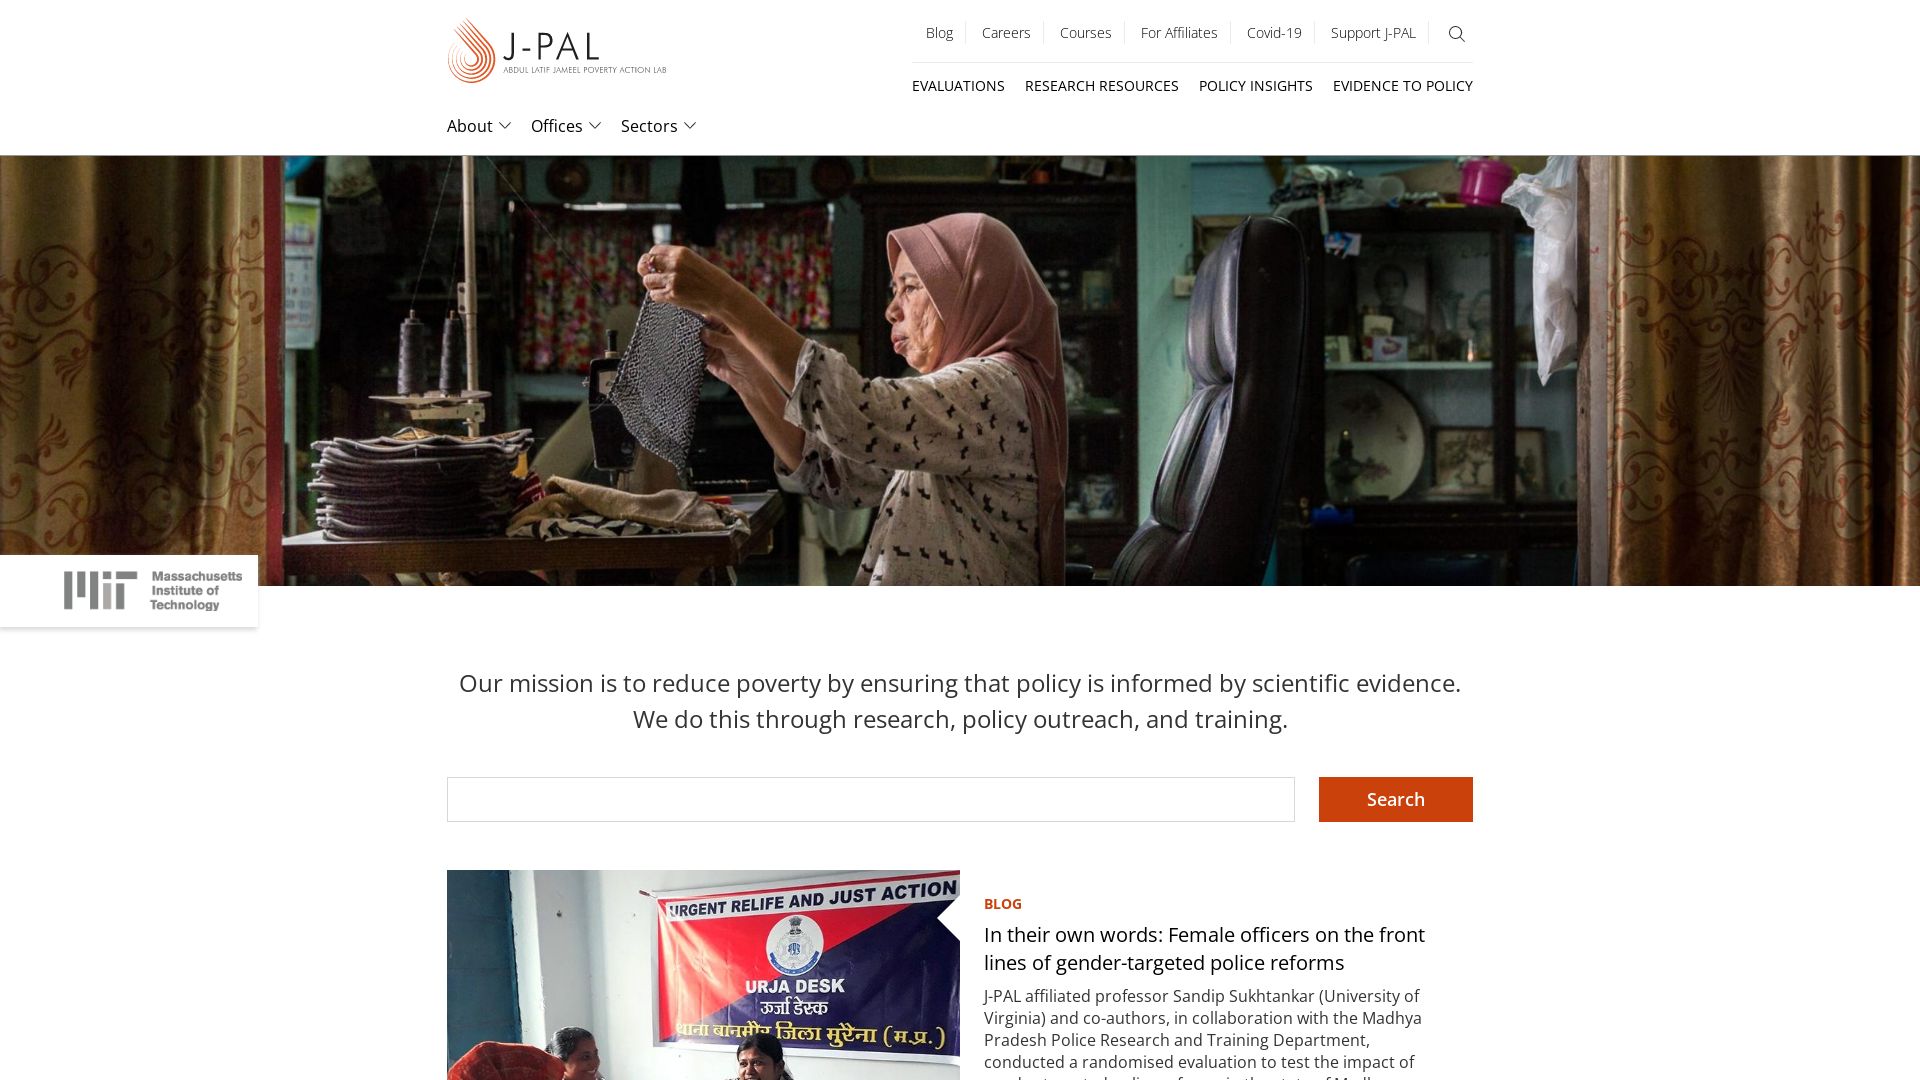 Website status povertyactionlab.org is   ONLINE